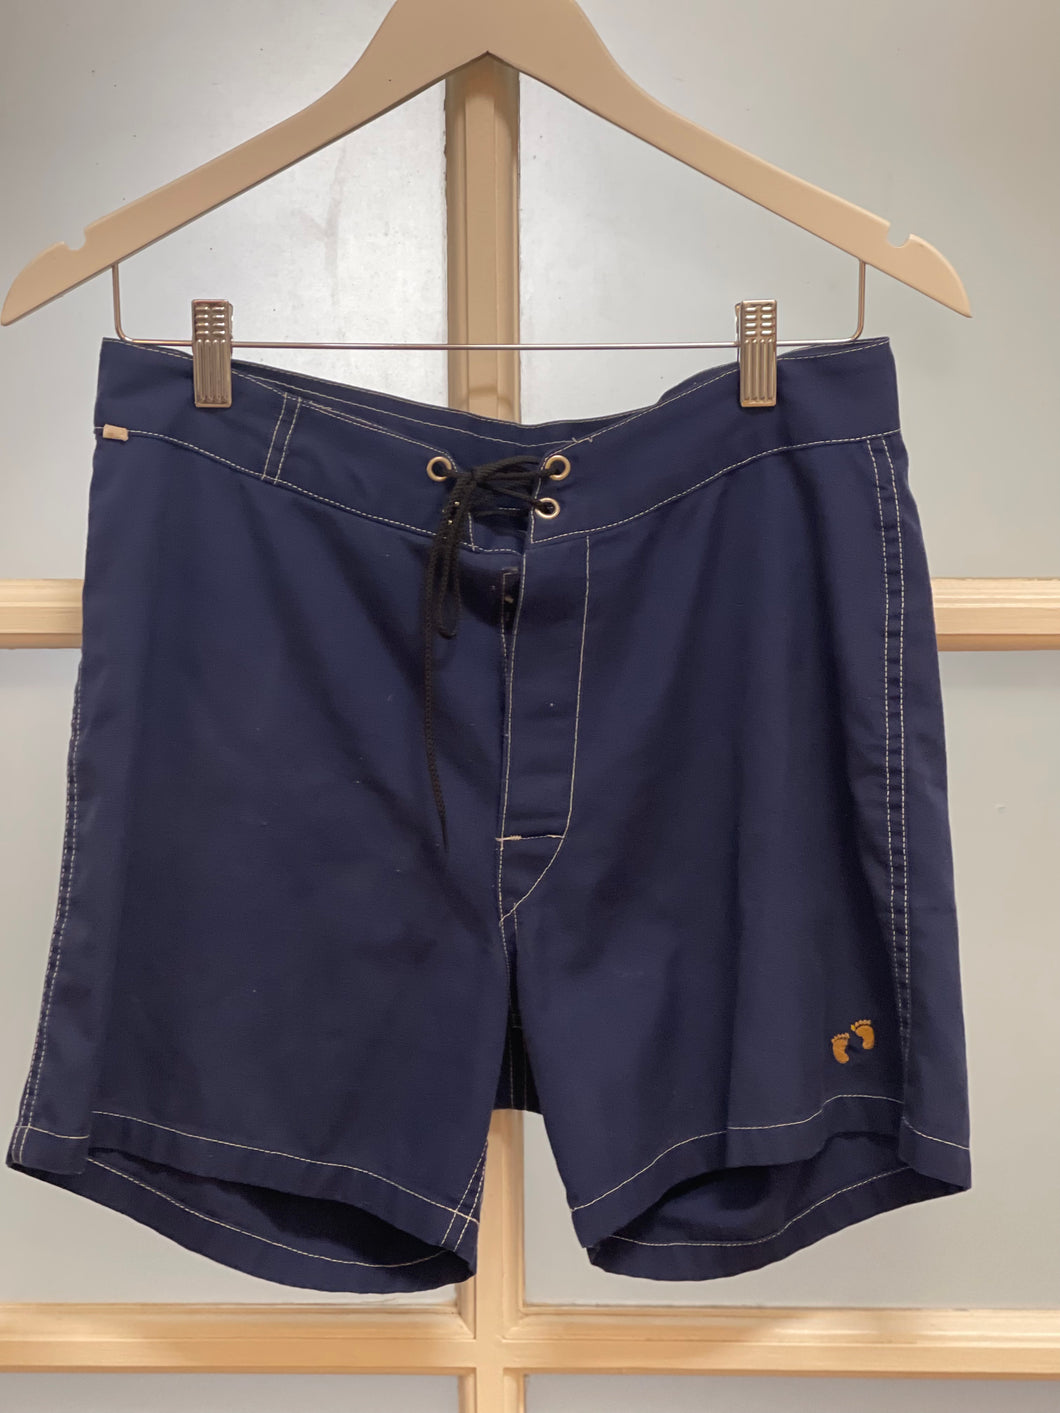 Ohanalei Vintage - “Hang Ten” Surf Shorts